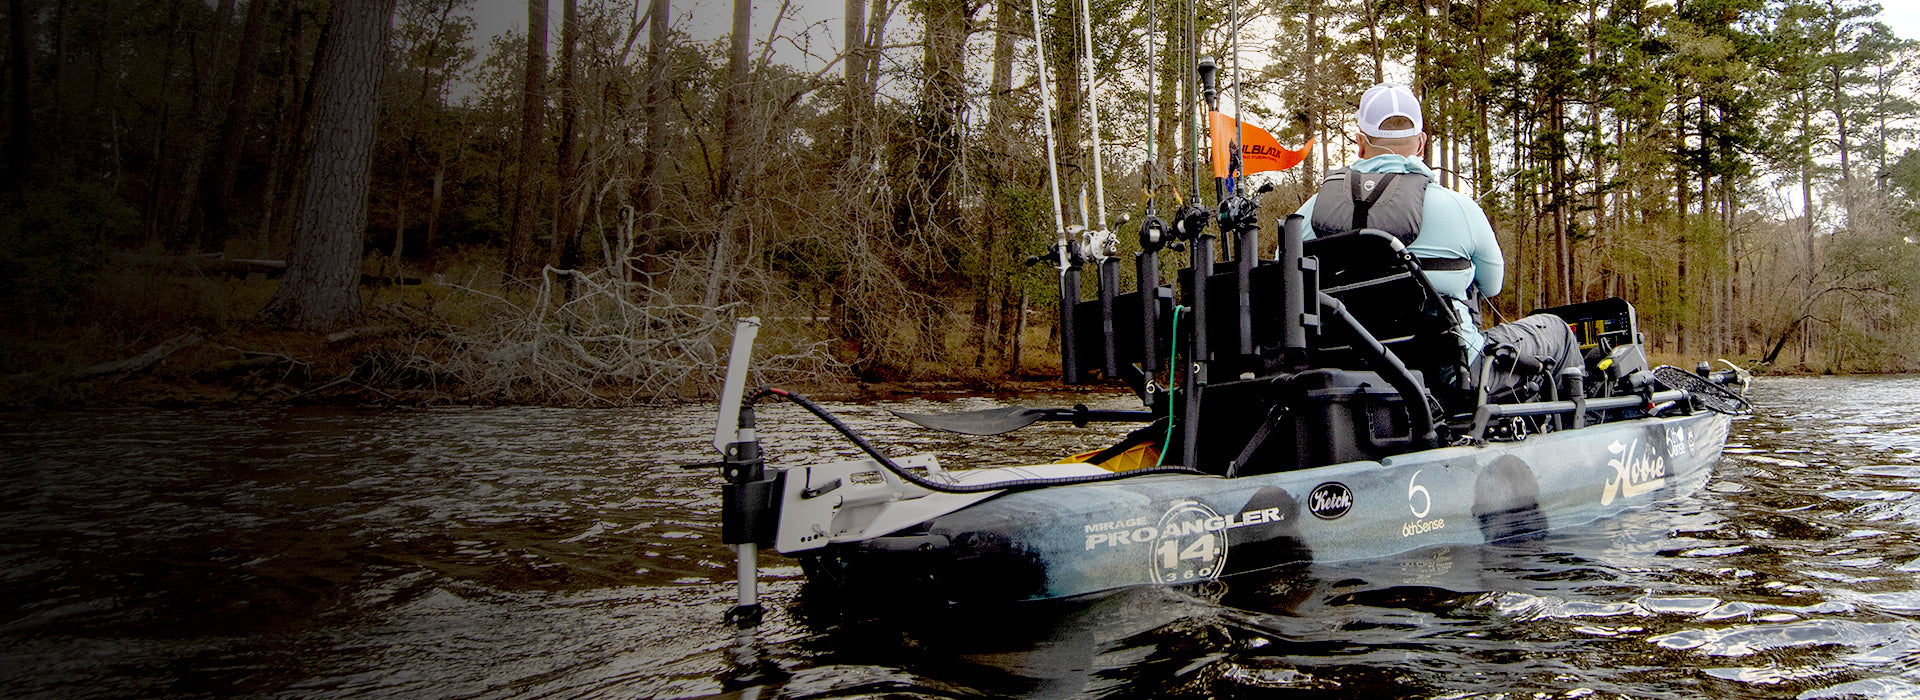 YakGear Kayak Angler Crate Kits Provide Smart Storage with Full Custom –